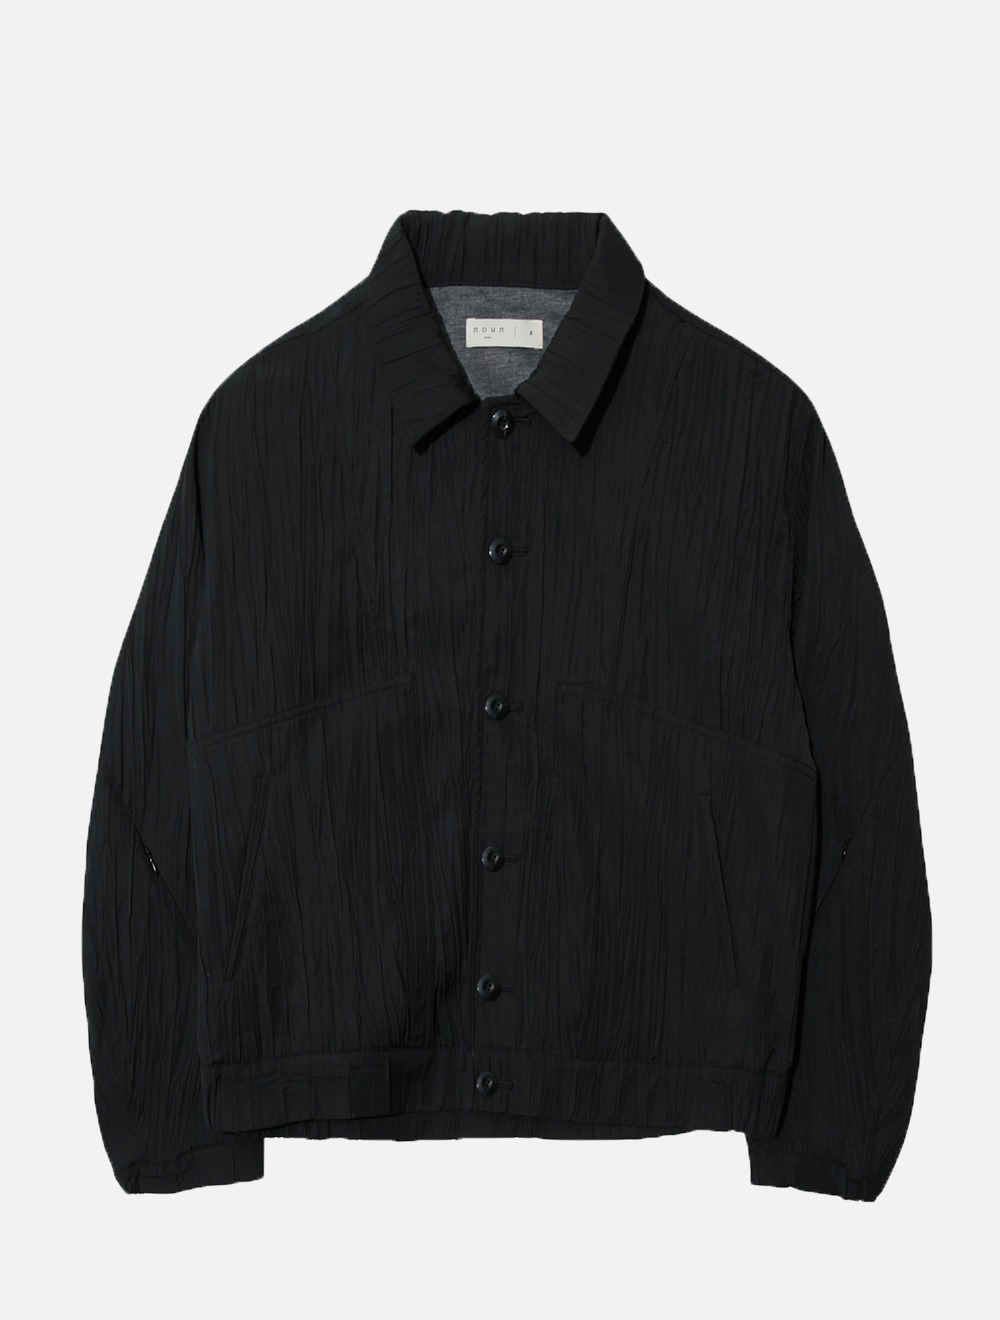 wrinkle wide jacket (black)